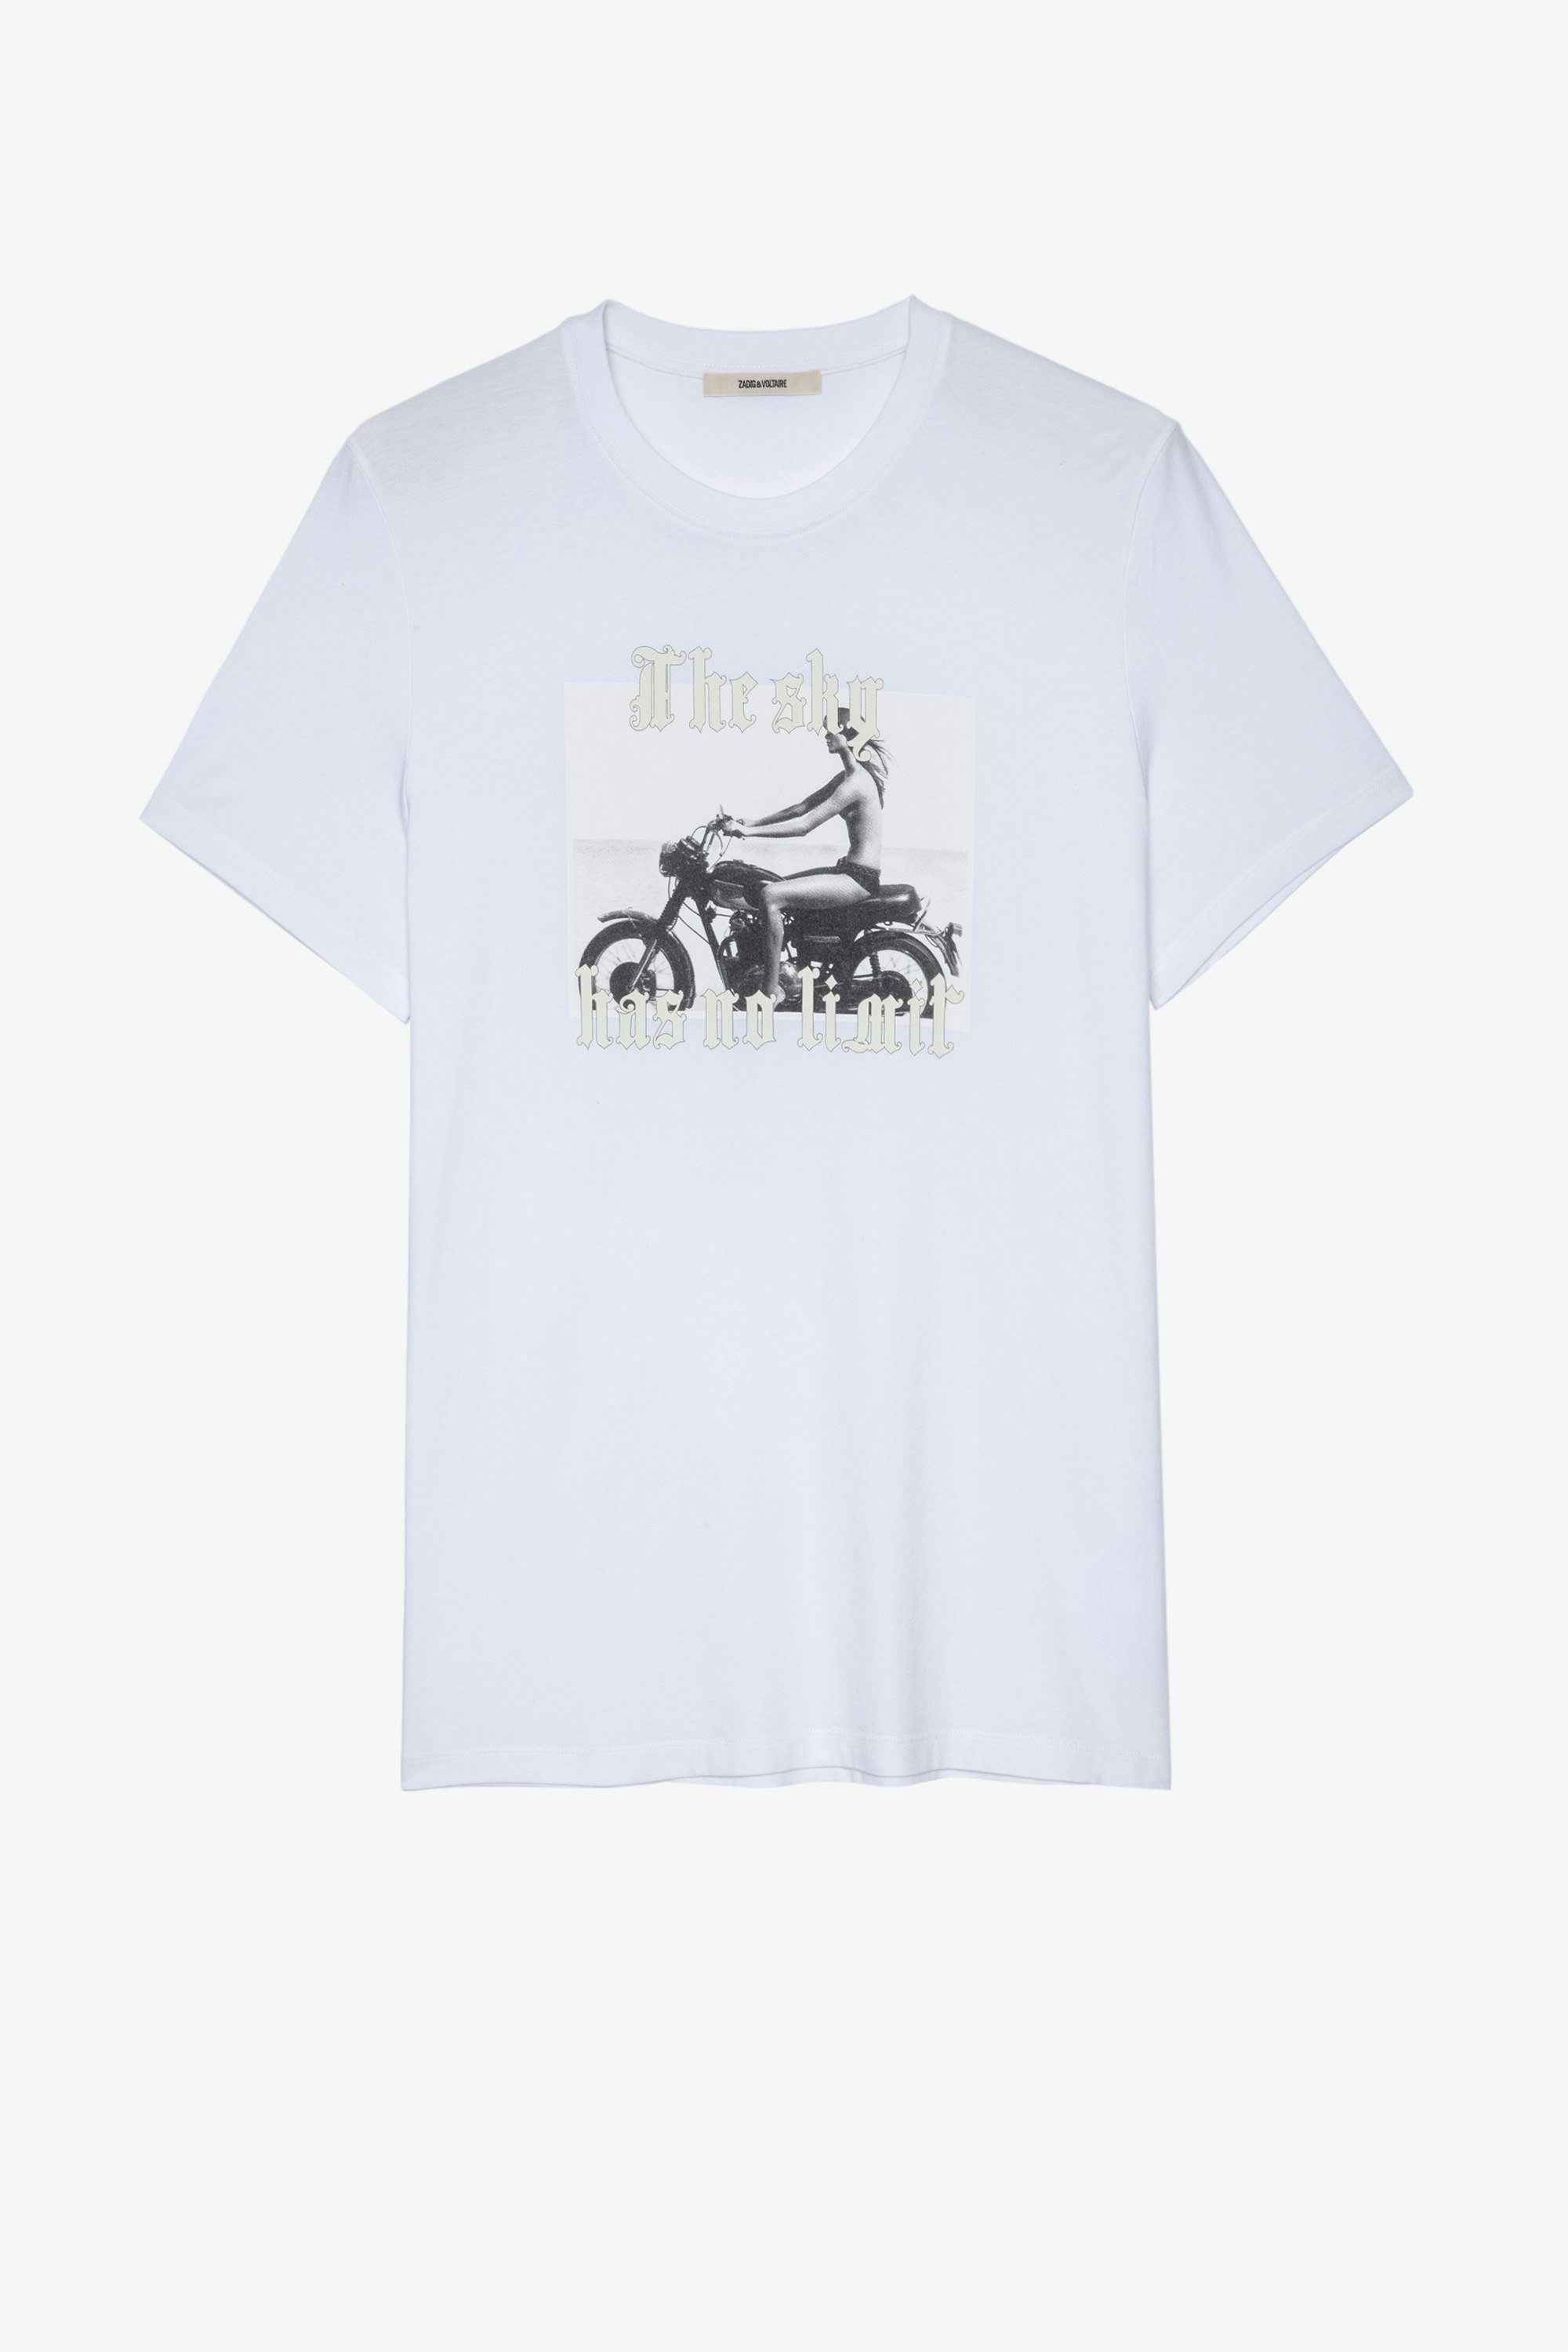 T-Shirt Ted Photoprint Tee-shirt en coton blanc imprimé photo Homme